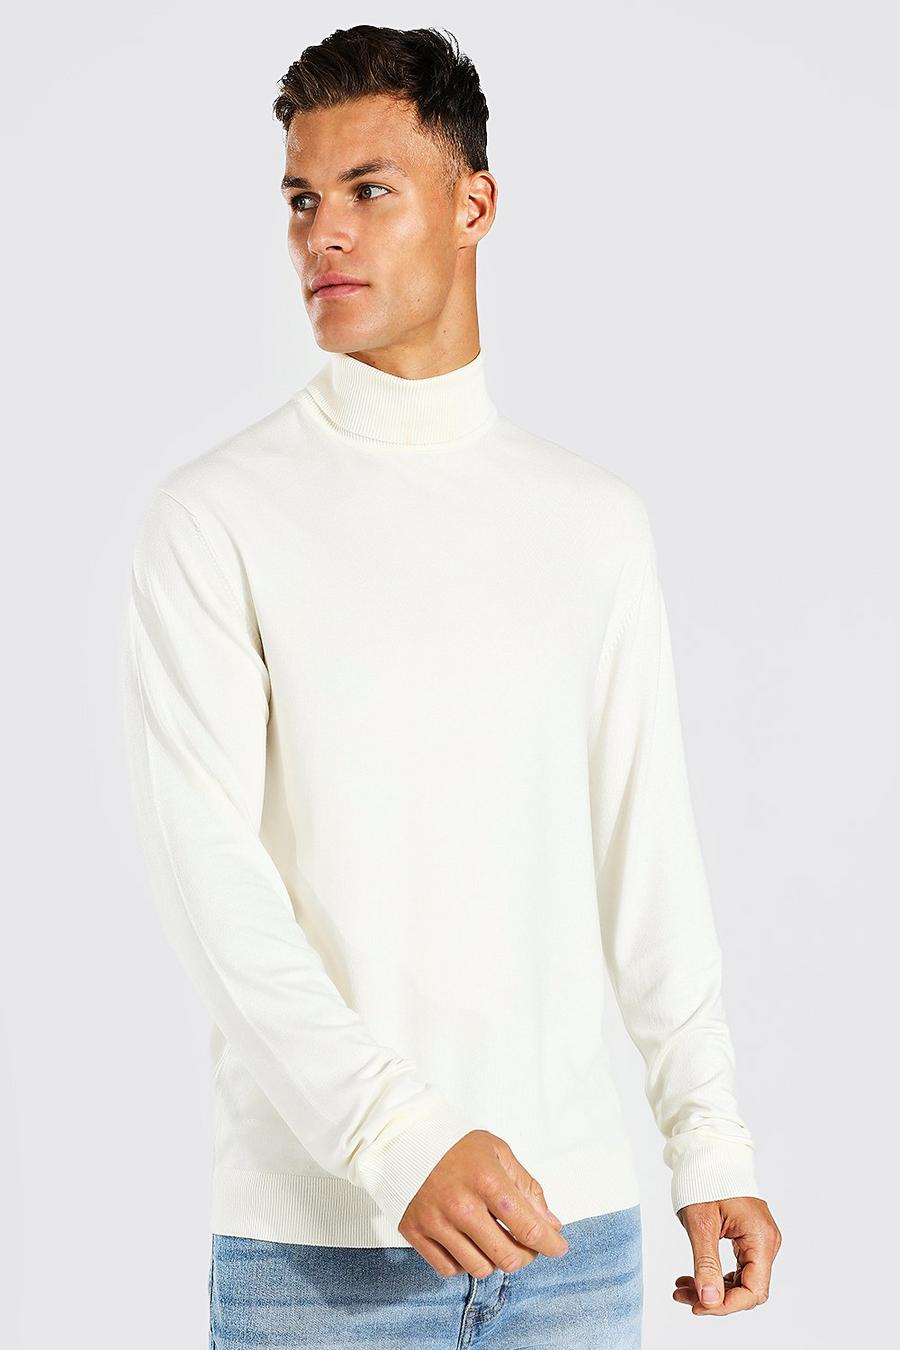 Cream white סוודר בגזרה רגילה מבד ממוחזר עם צווארון נגלל, לגברים גבוהים